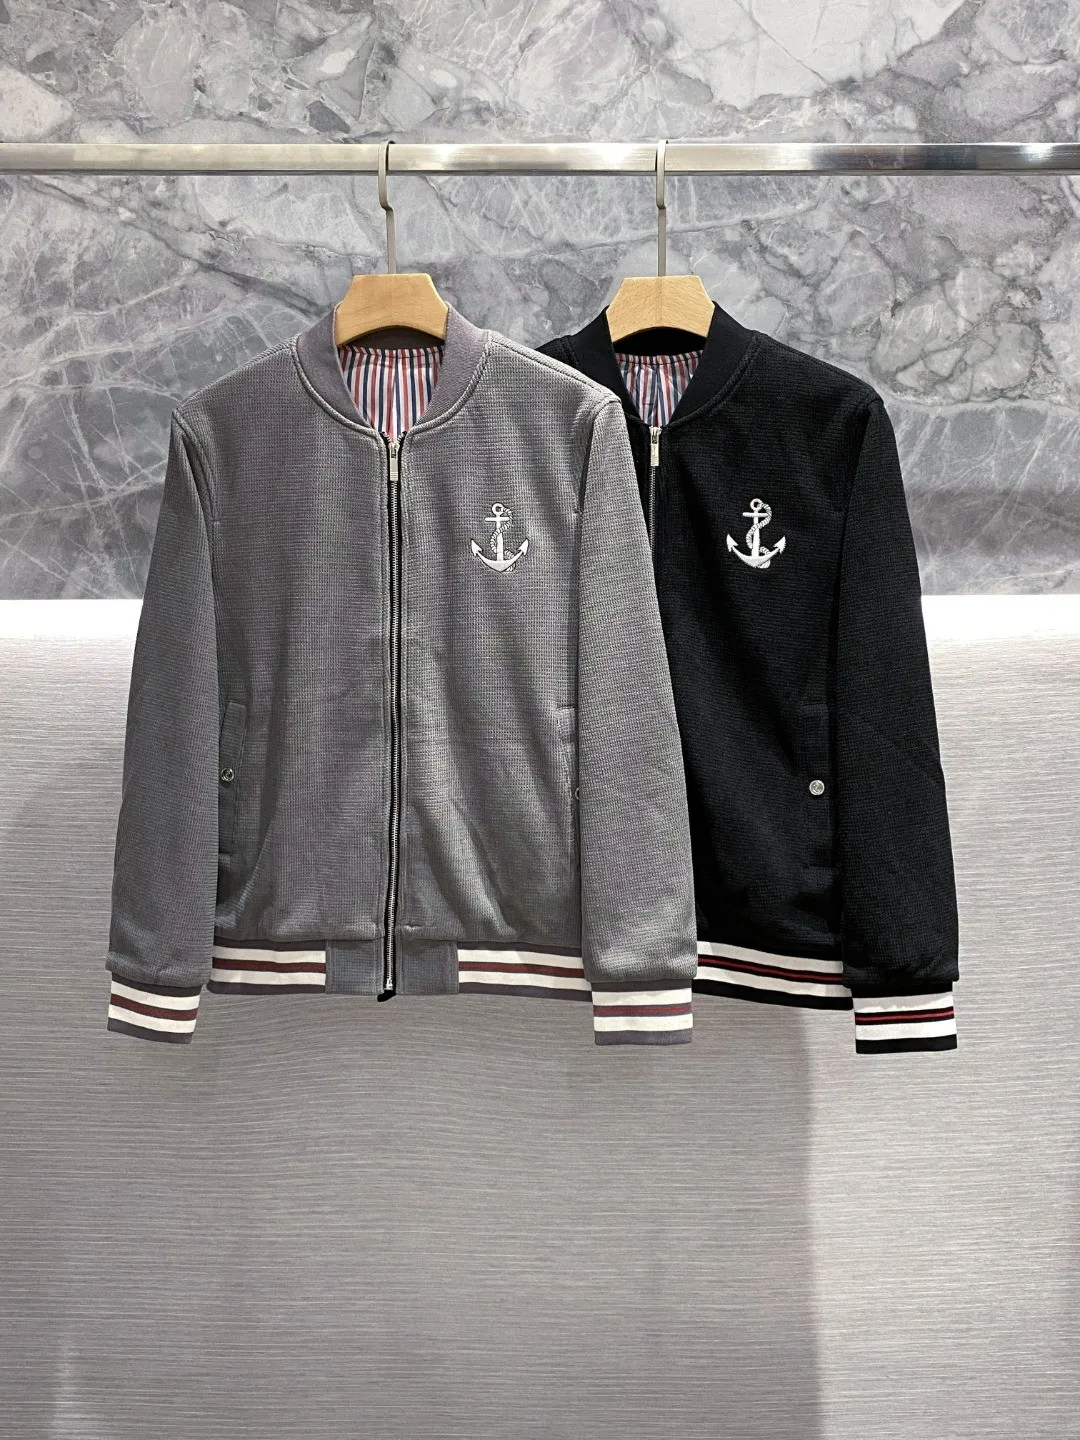 New Mens Jacket Baseball Collar Stripes Luxury Brand Design Jackets Coat High Quality Smart Causal Bomber Jackets